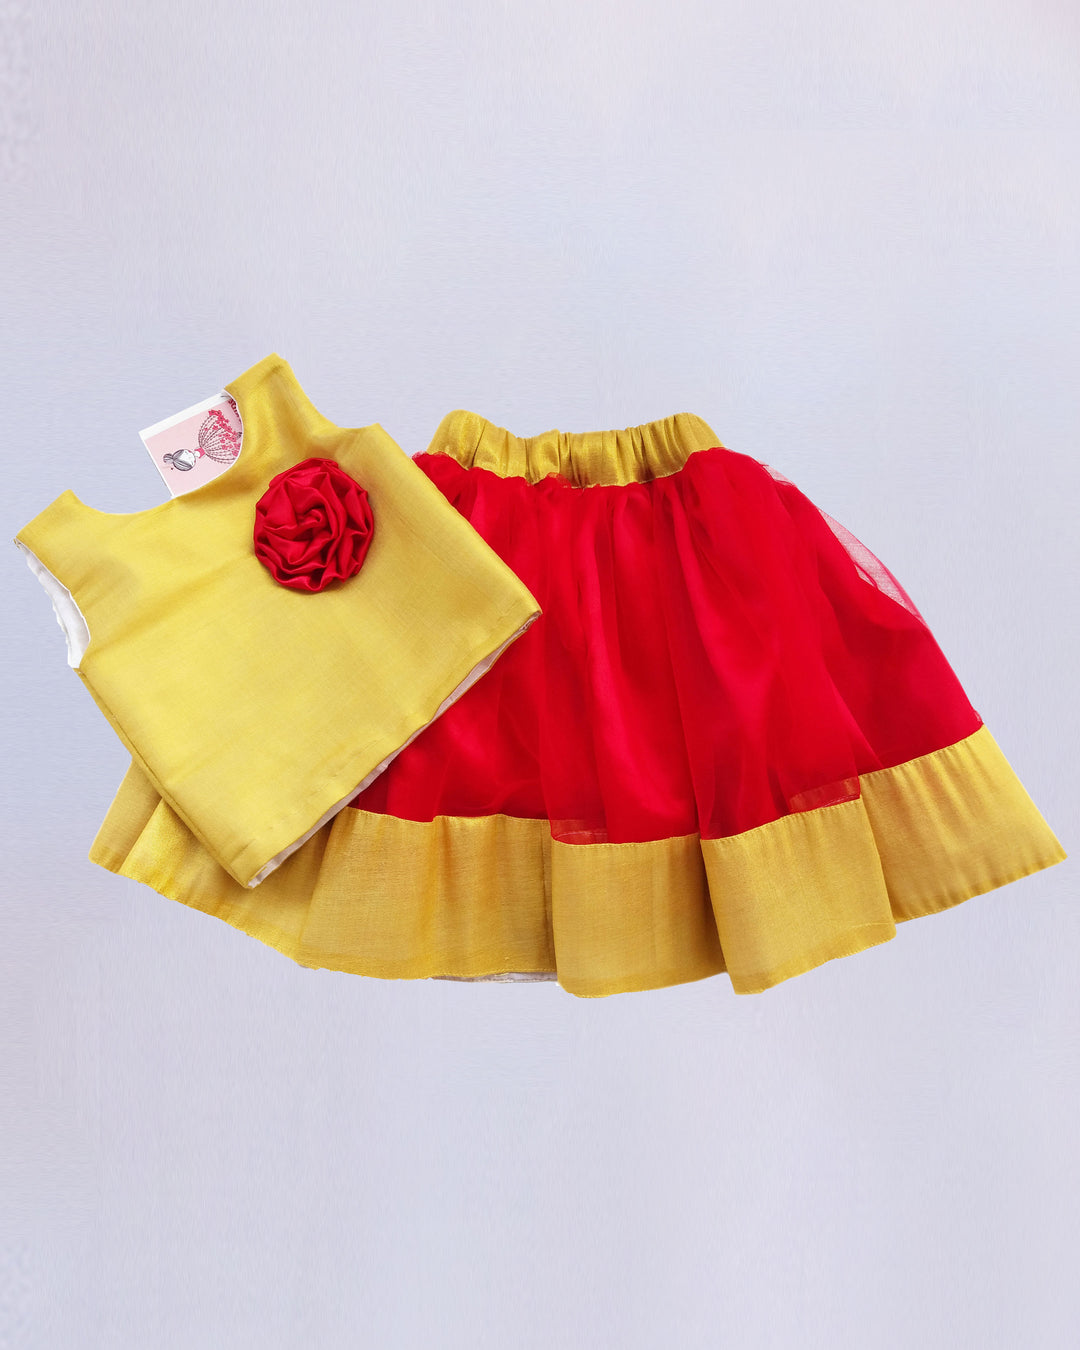 red gold kerala tissue baby girls traditional onam dresses stanwells kids